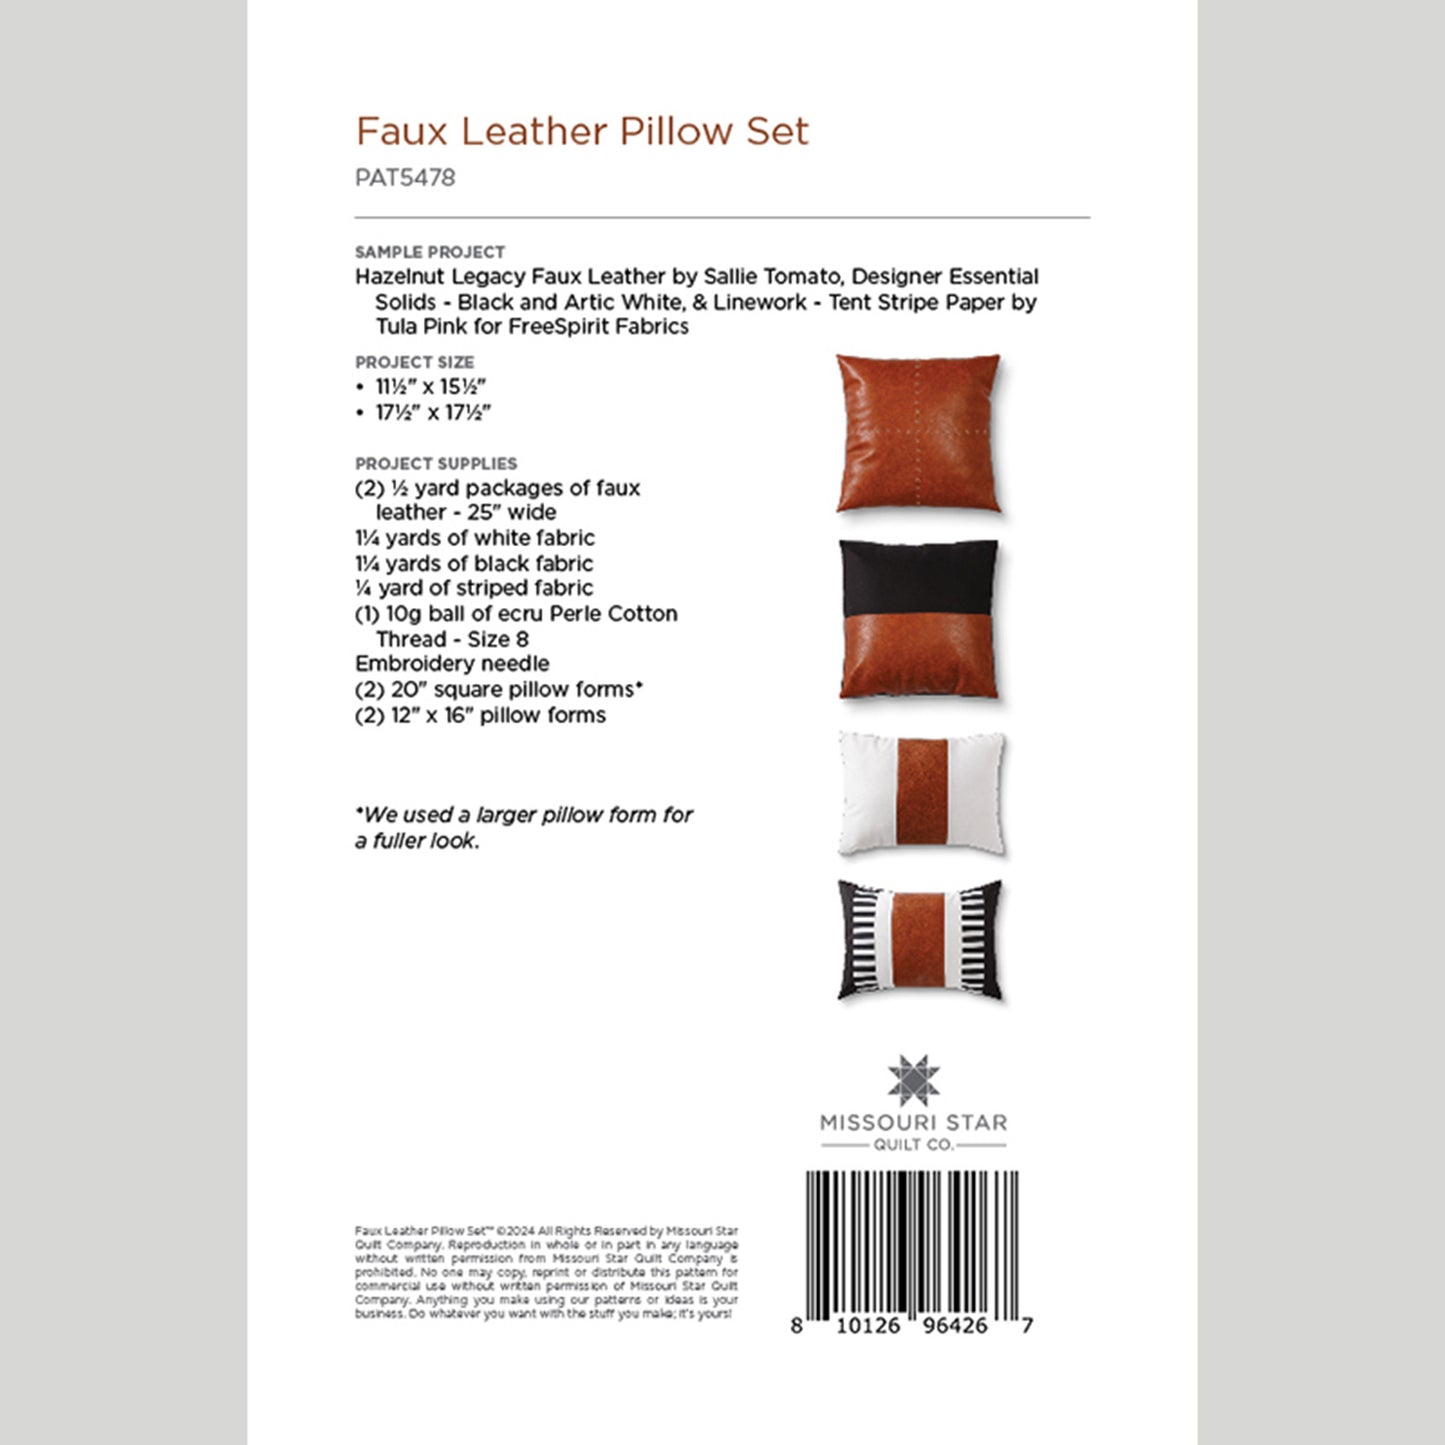 Digital Faux Leather Pillow Set Pattern by Missouri Star Alternative View #1